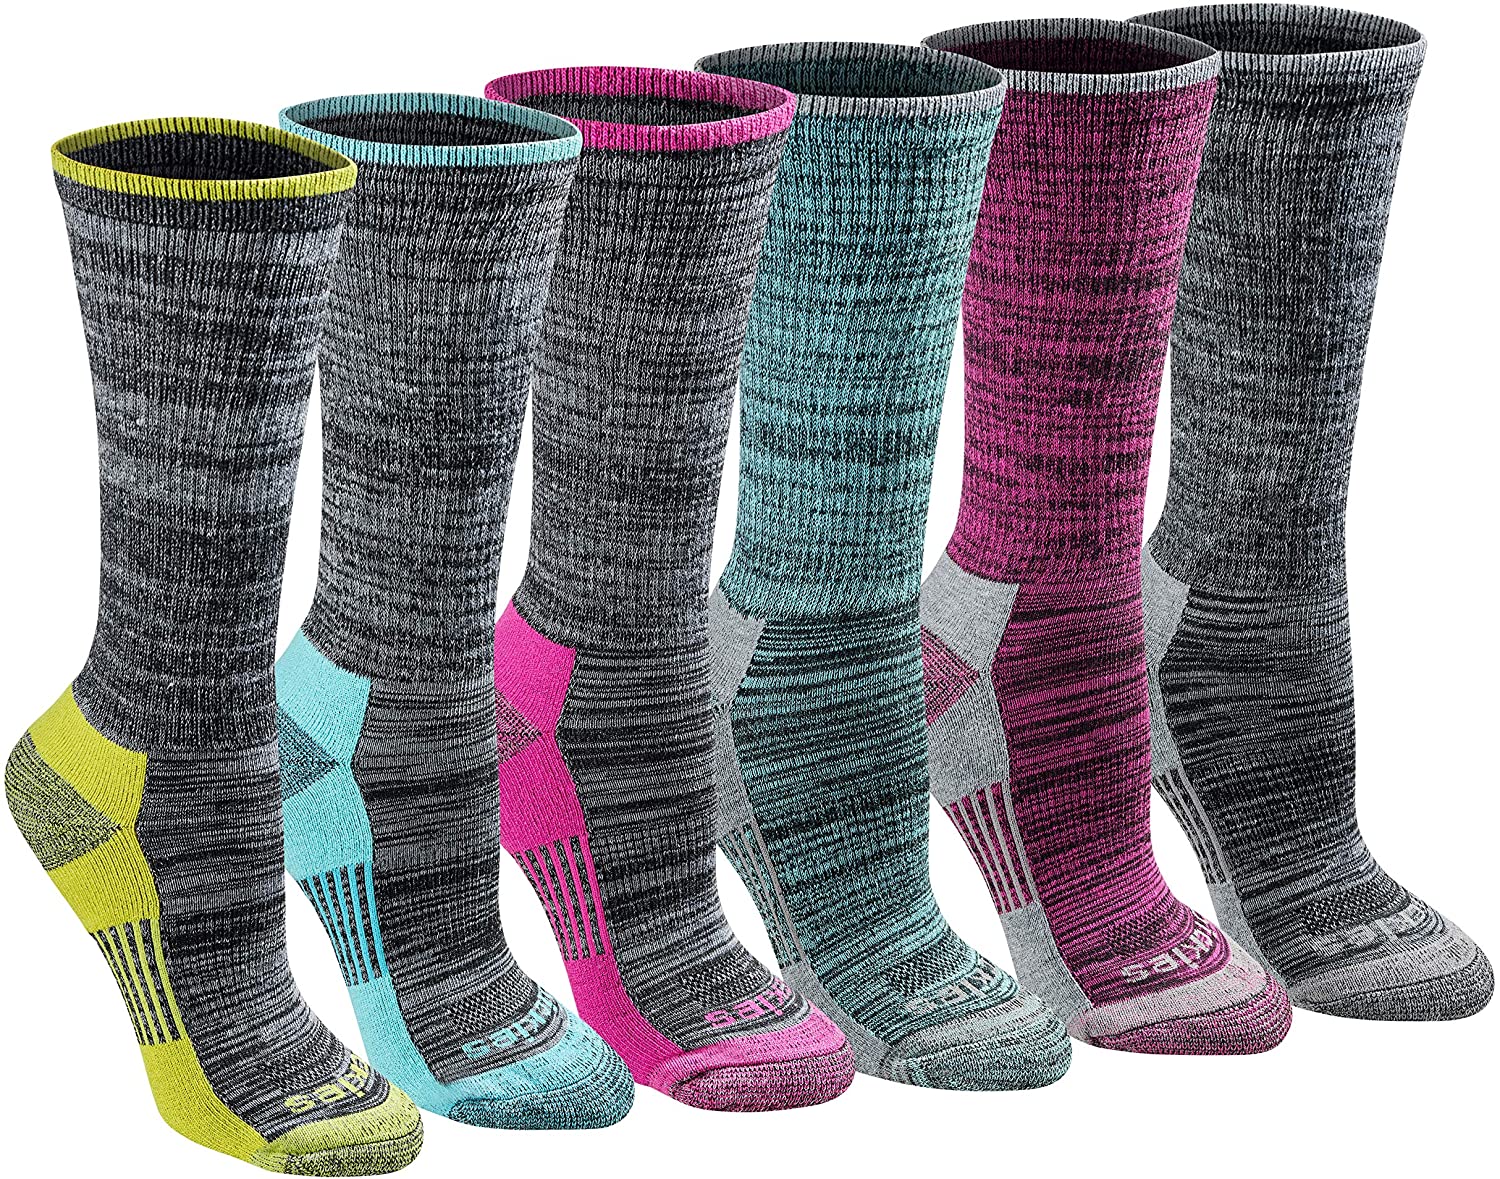 Dickies Womens Dri-Tech Crew Socks Assorted Colors Pack of 6 Size 6-9